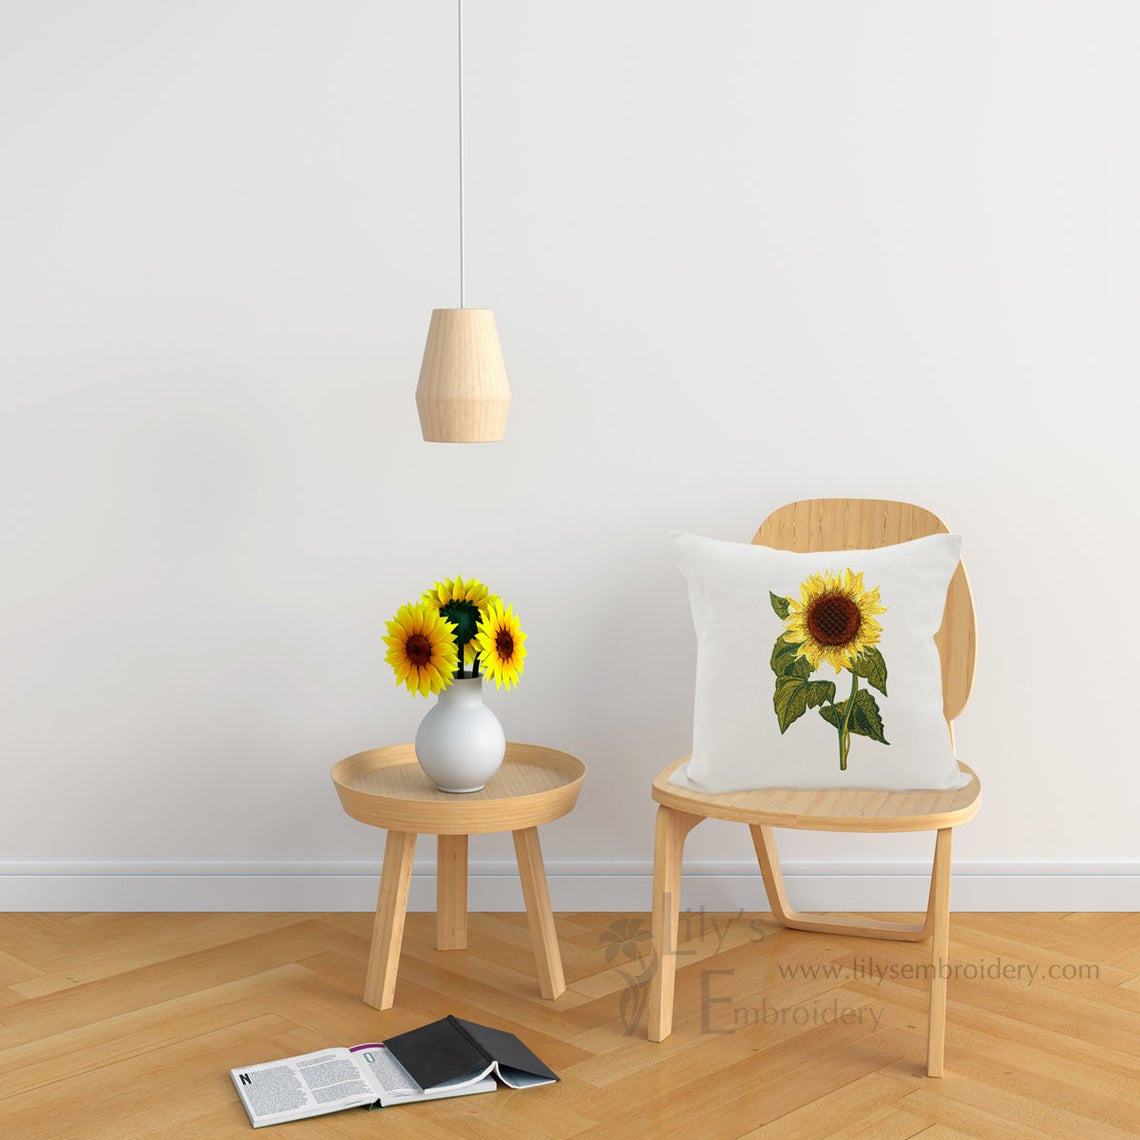 Elegant Sunflower Machine Embroidery Design